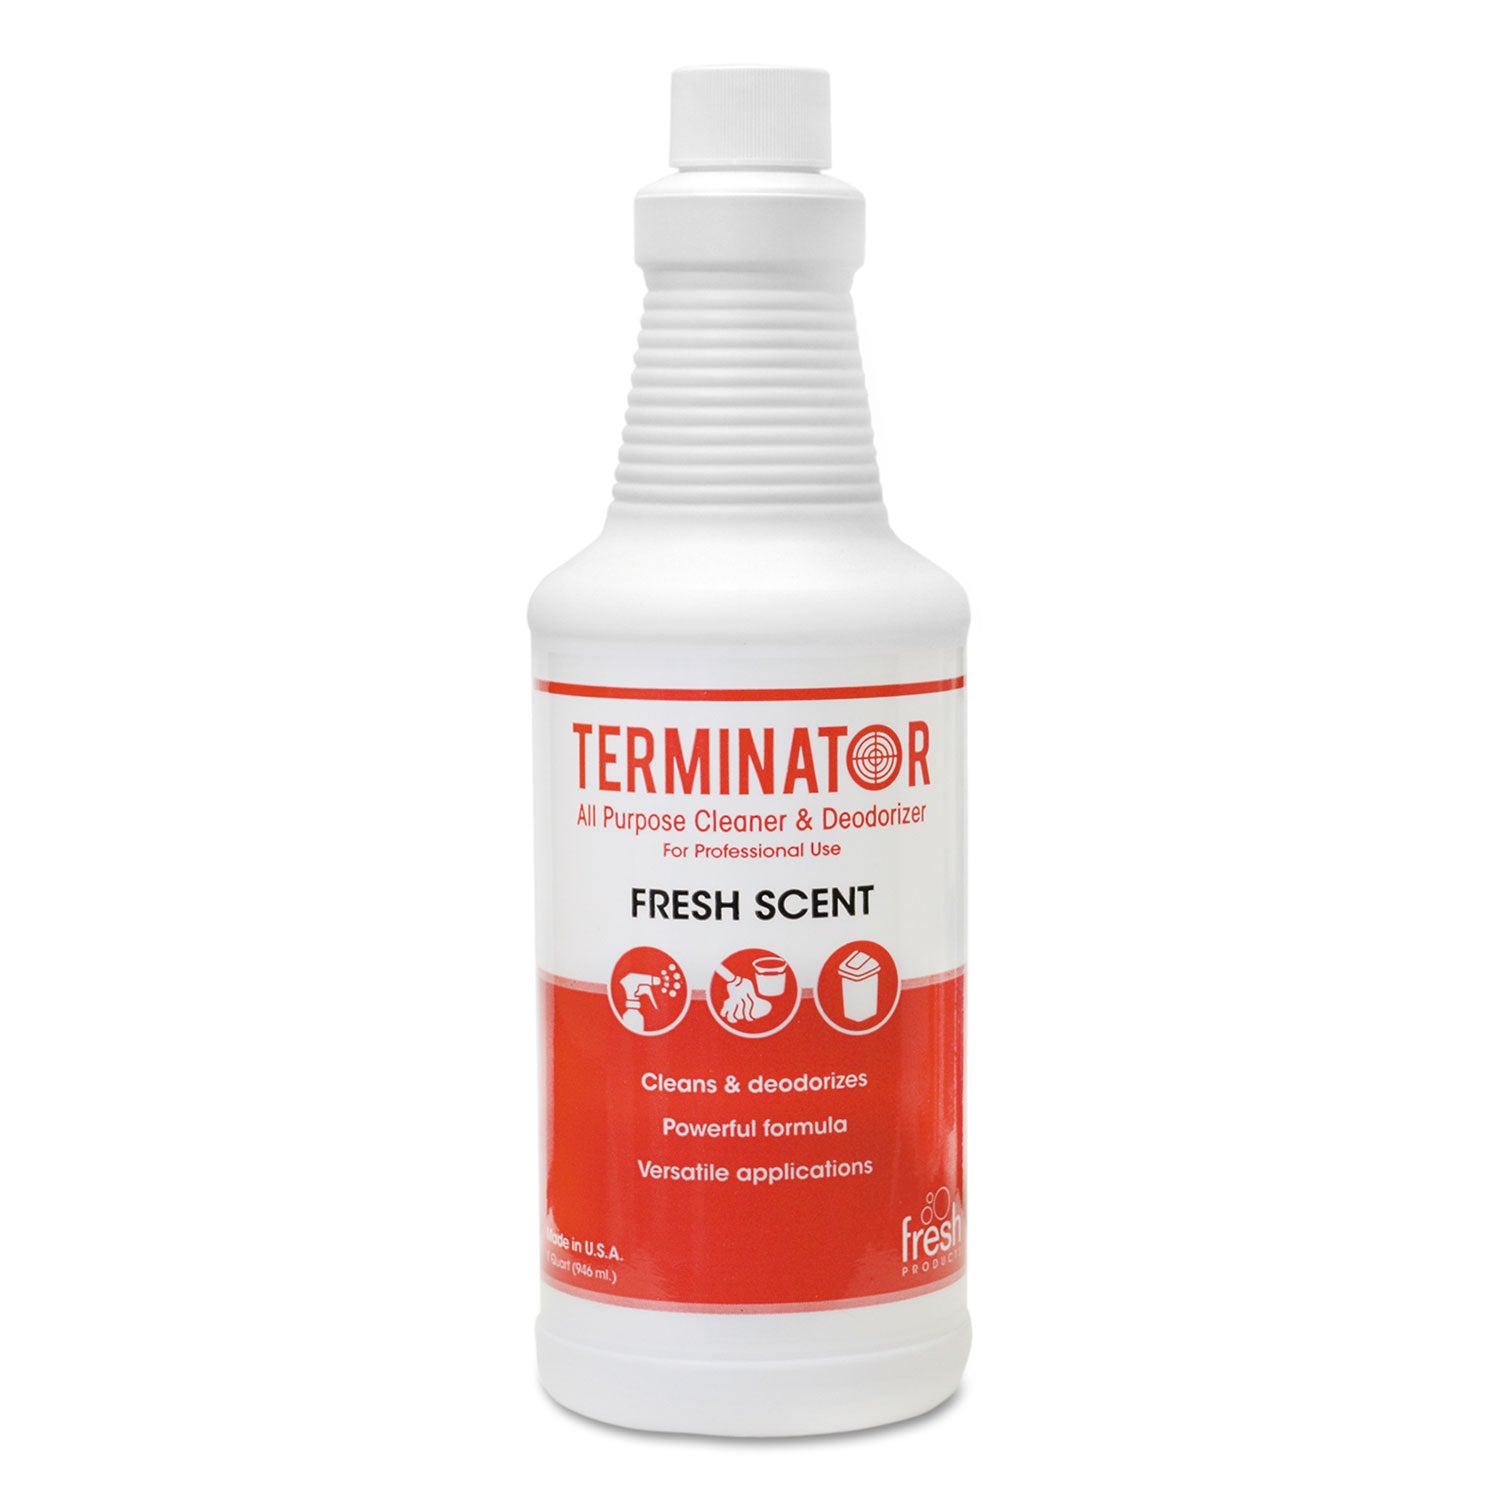 Terminator All-Purpose Cleaner/Deodorizer with (2) Trigger Sprayers, 32 oz Bottles, 12/Carton - 2